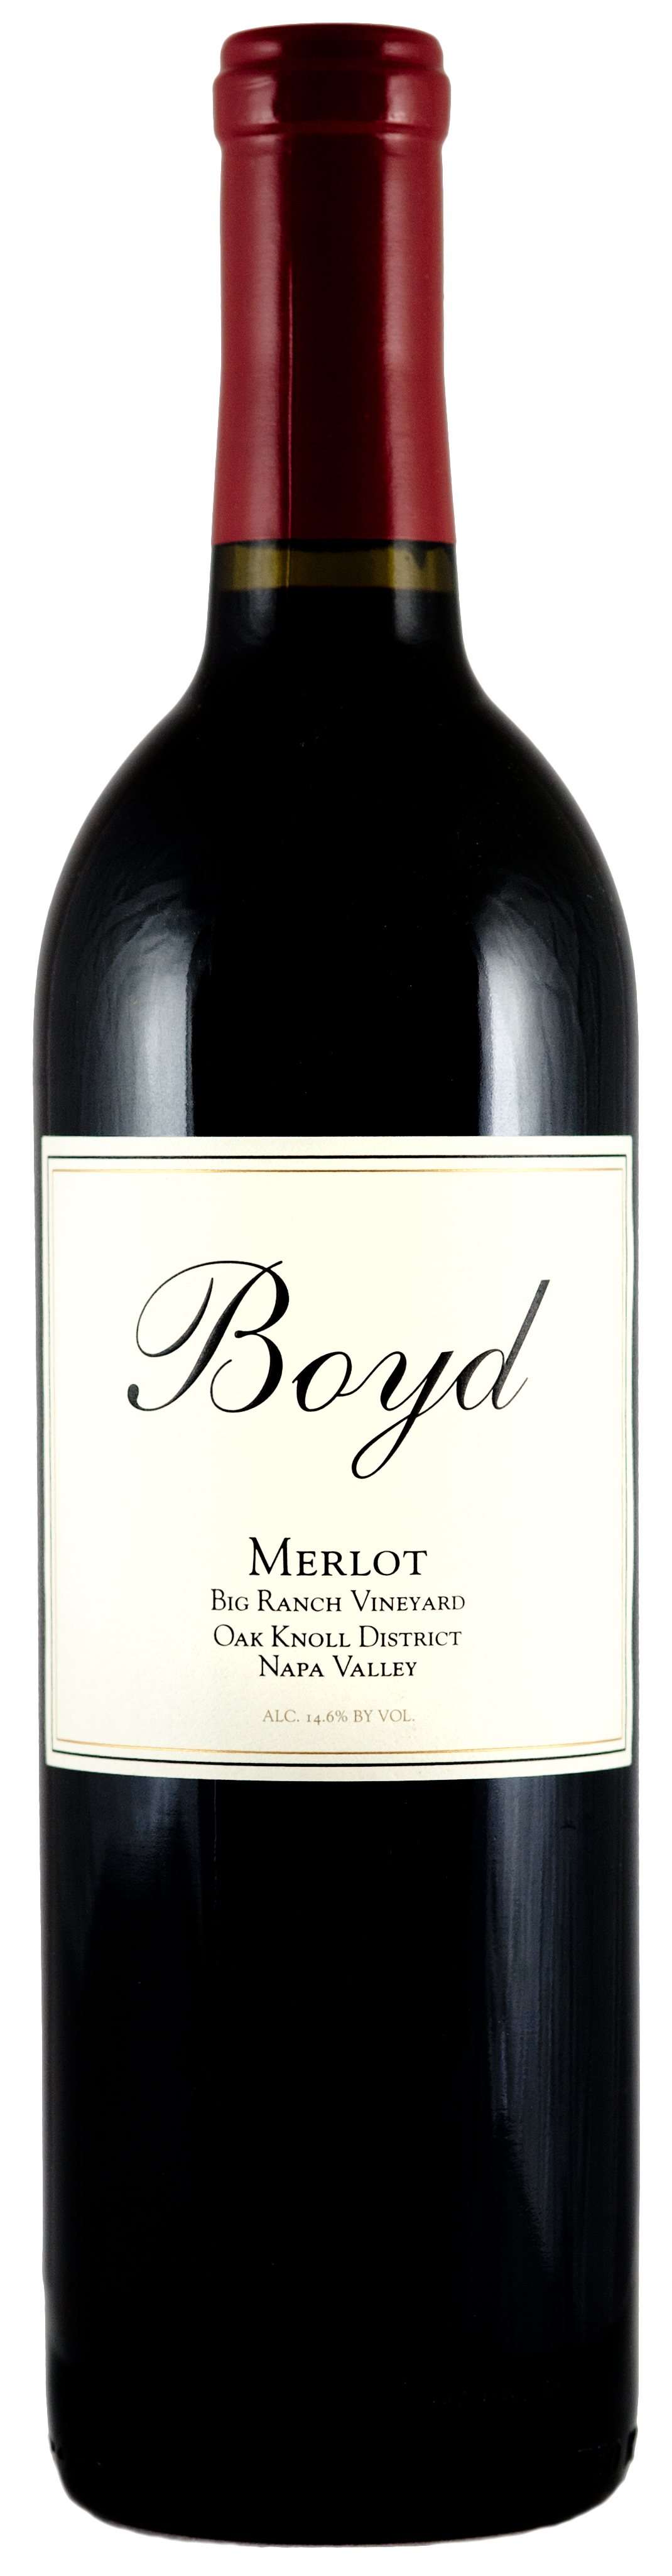 Product Image for 2012 Merlot, Big Ranch Vineyard® Magnum